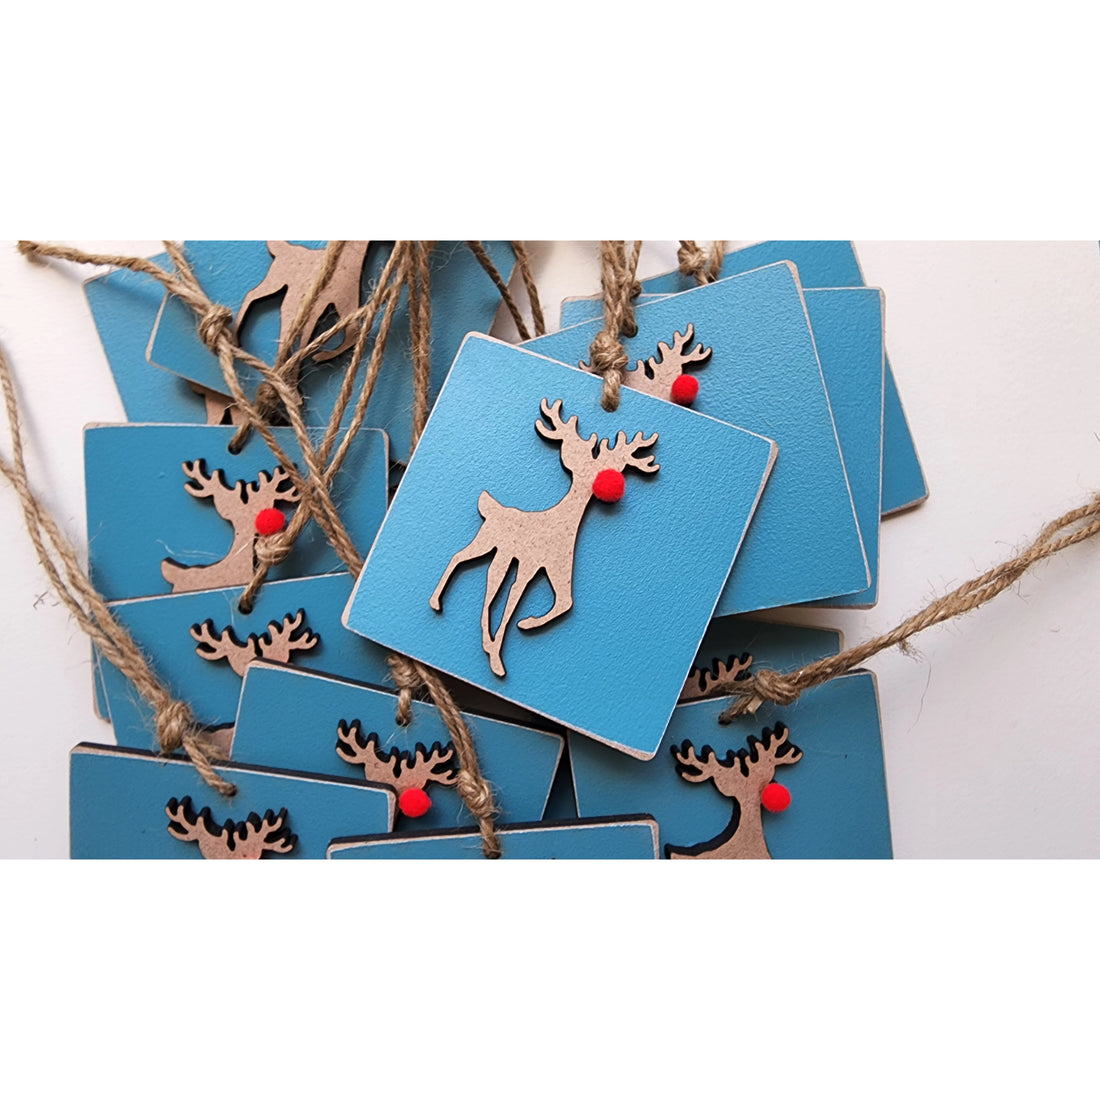 Blue Reindeer Ornament with Felt Red Nose